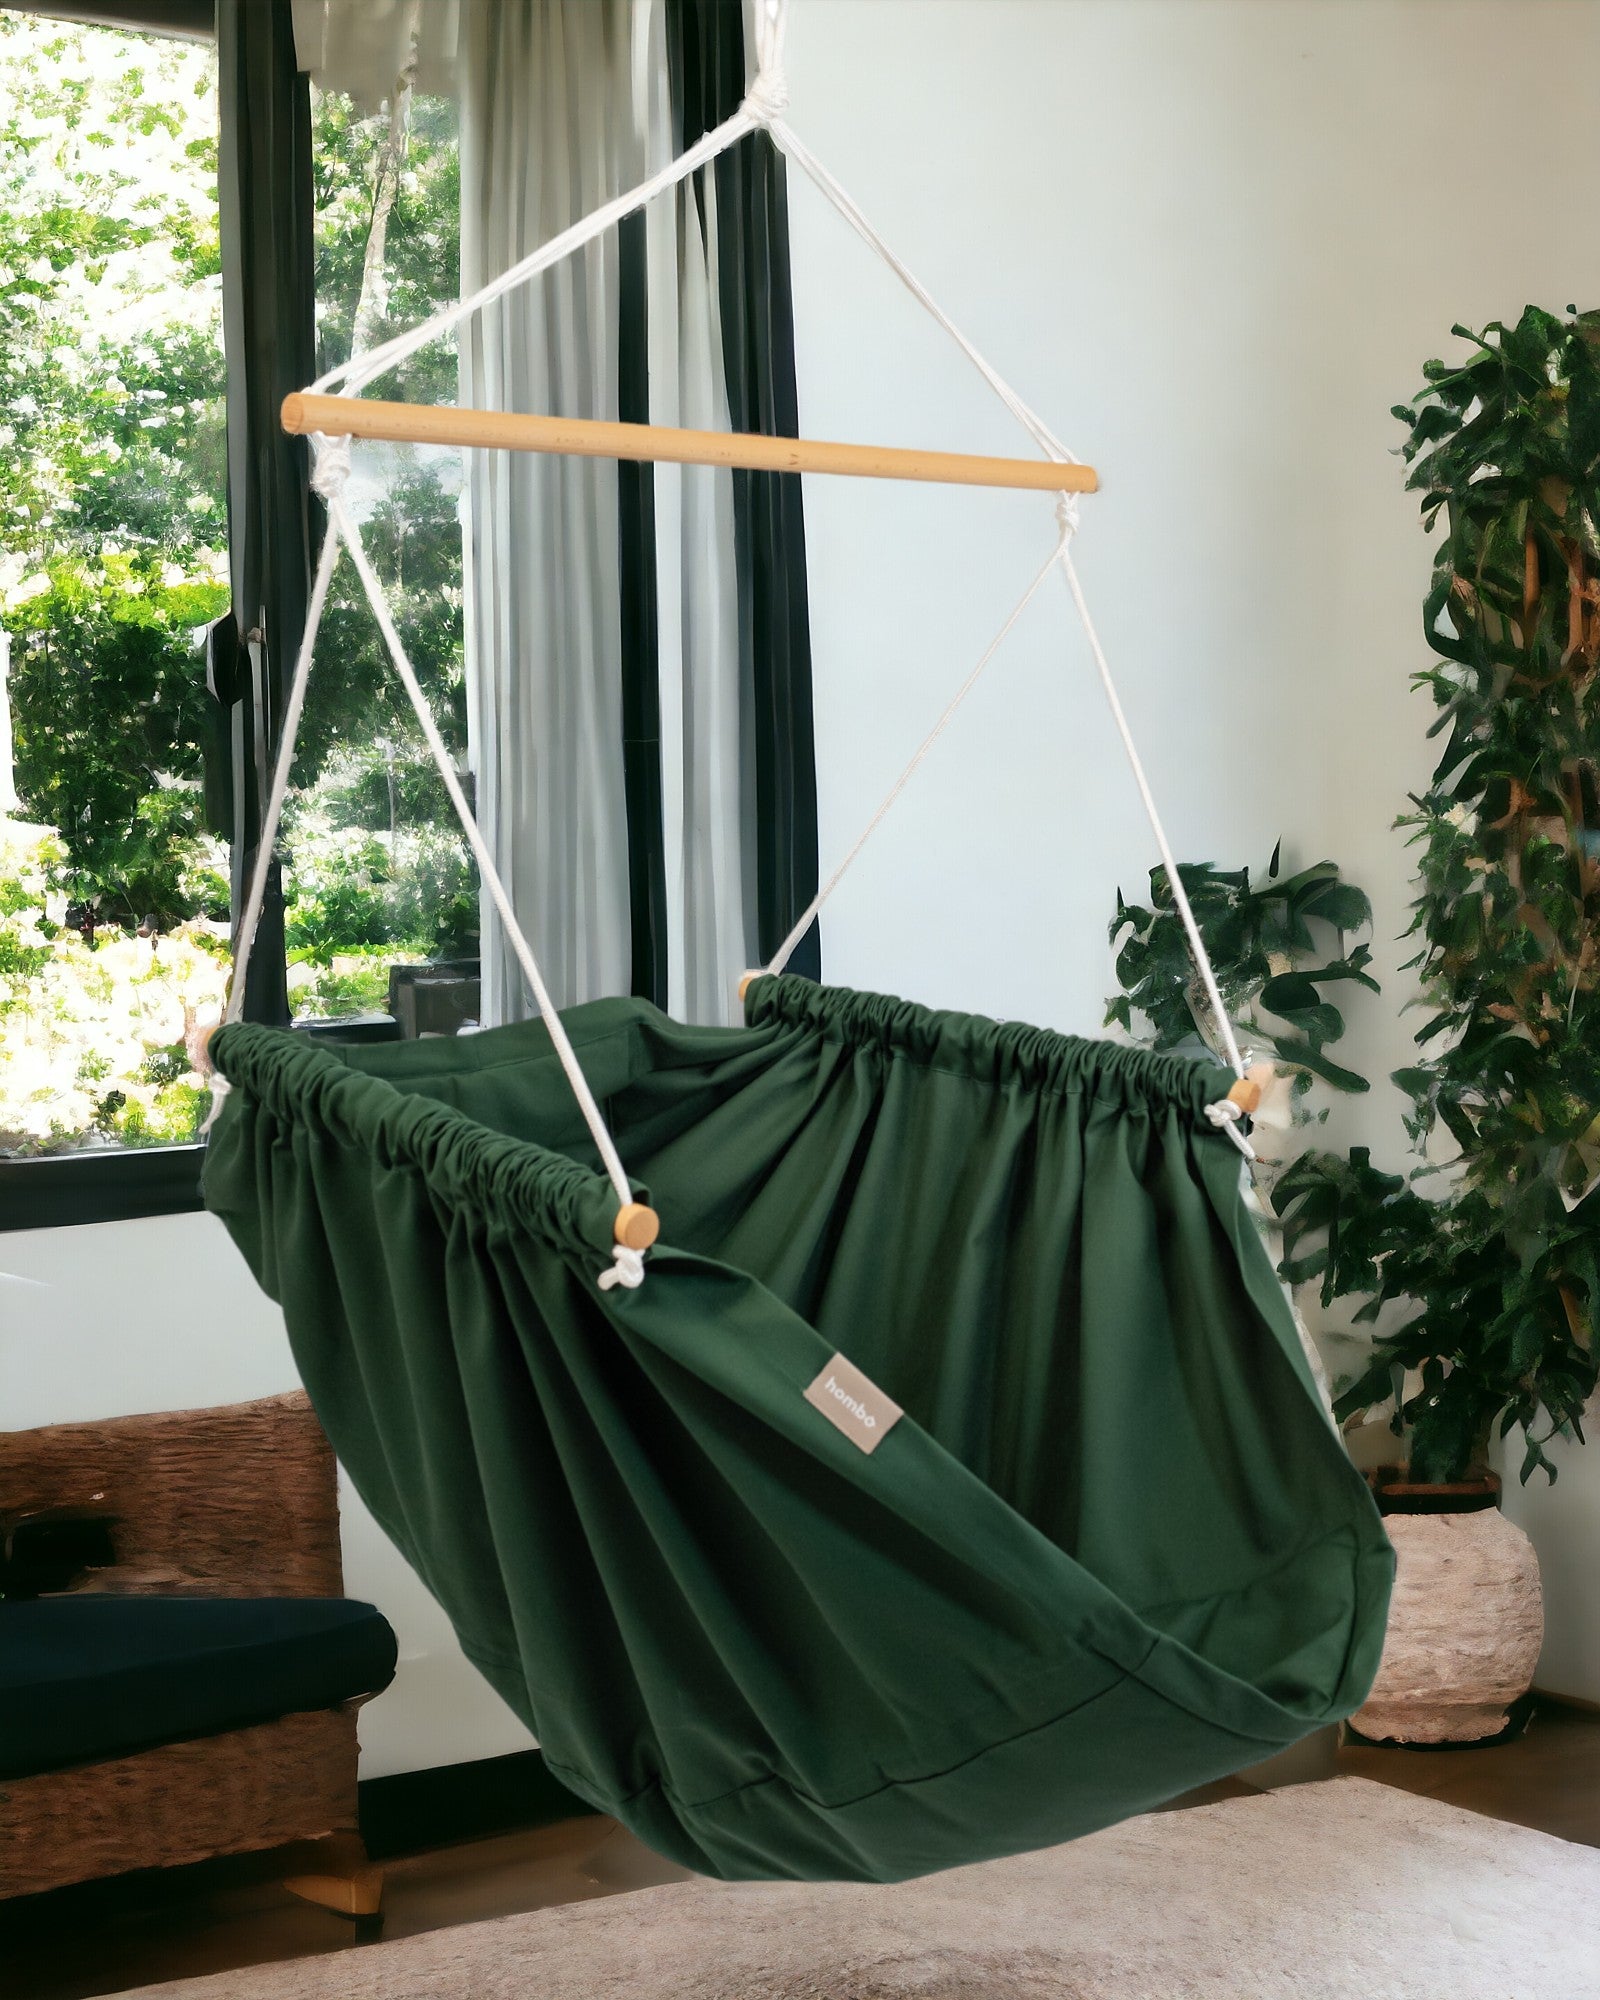 homba® zen mini hanging chair cotton green (2-10 years)